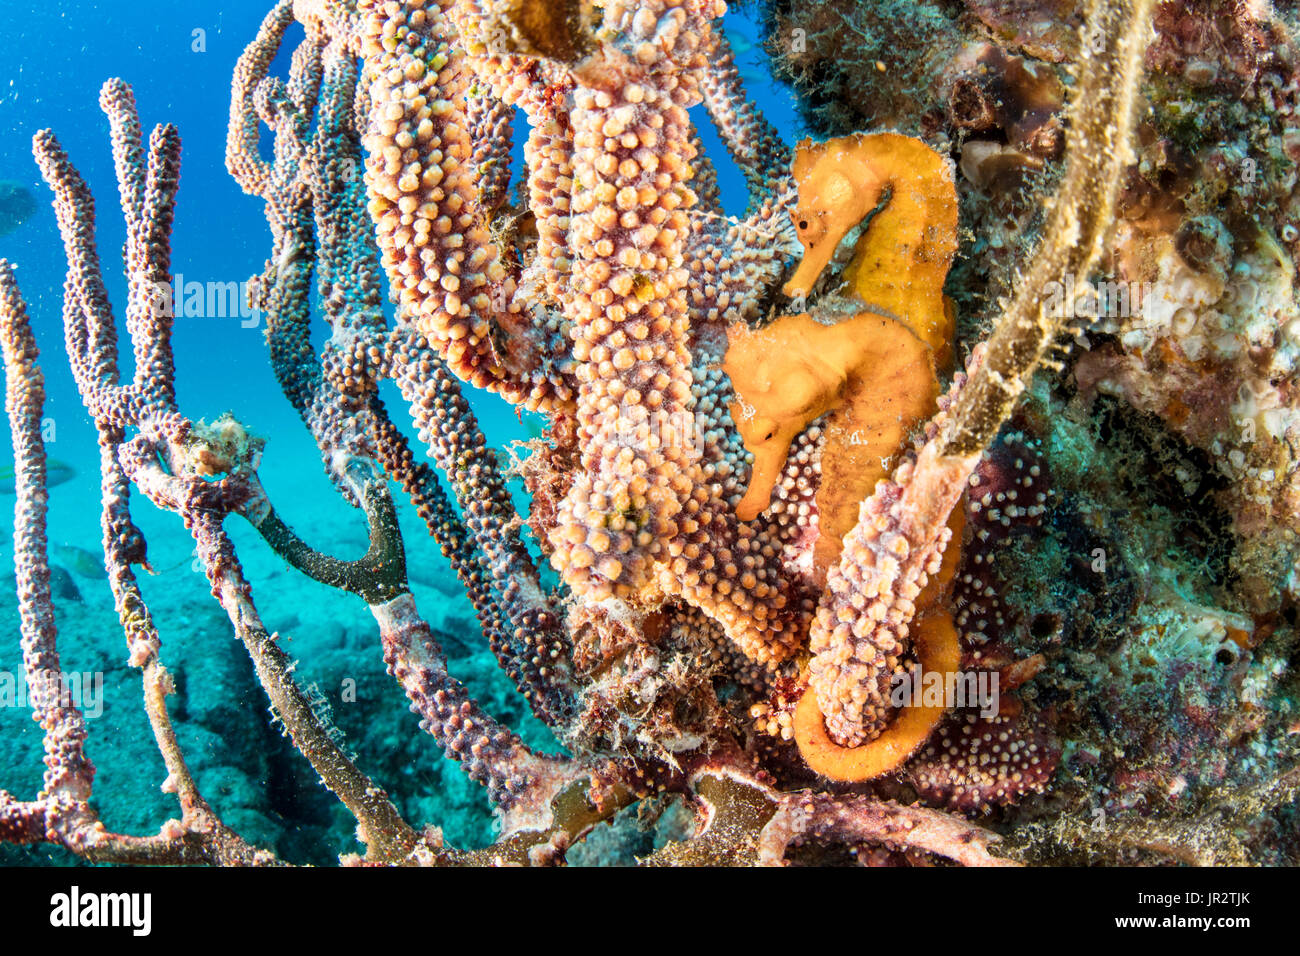 Couple of Pacific seahorse (Hippocampus ingens) Salvatierra wreck diving place, Sea of Cortez, Baja California, Mexico, East Pacific Ocean Stock Photo